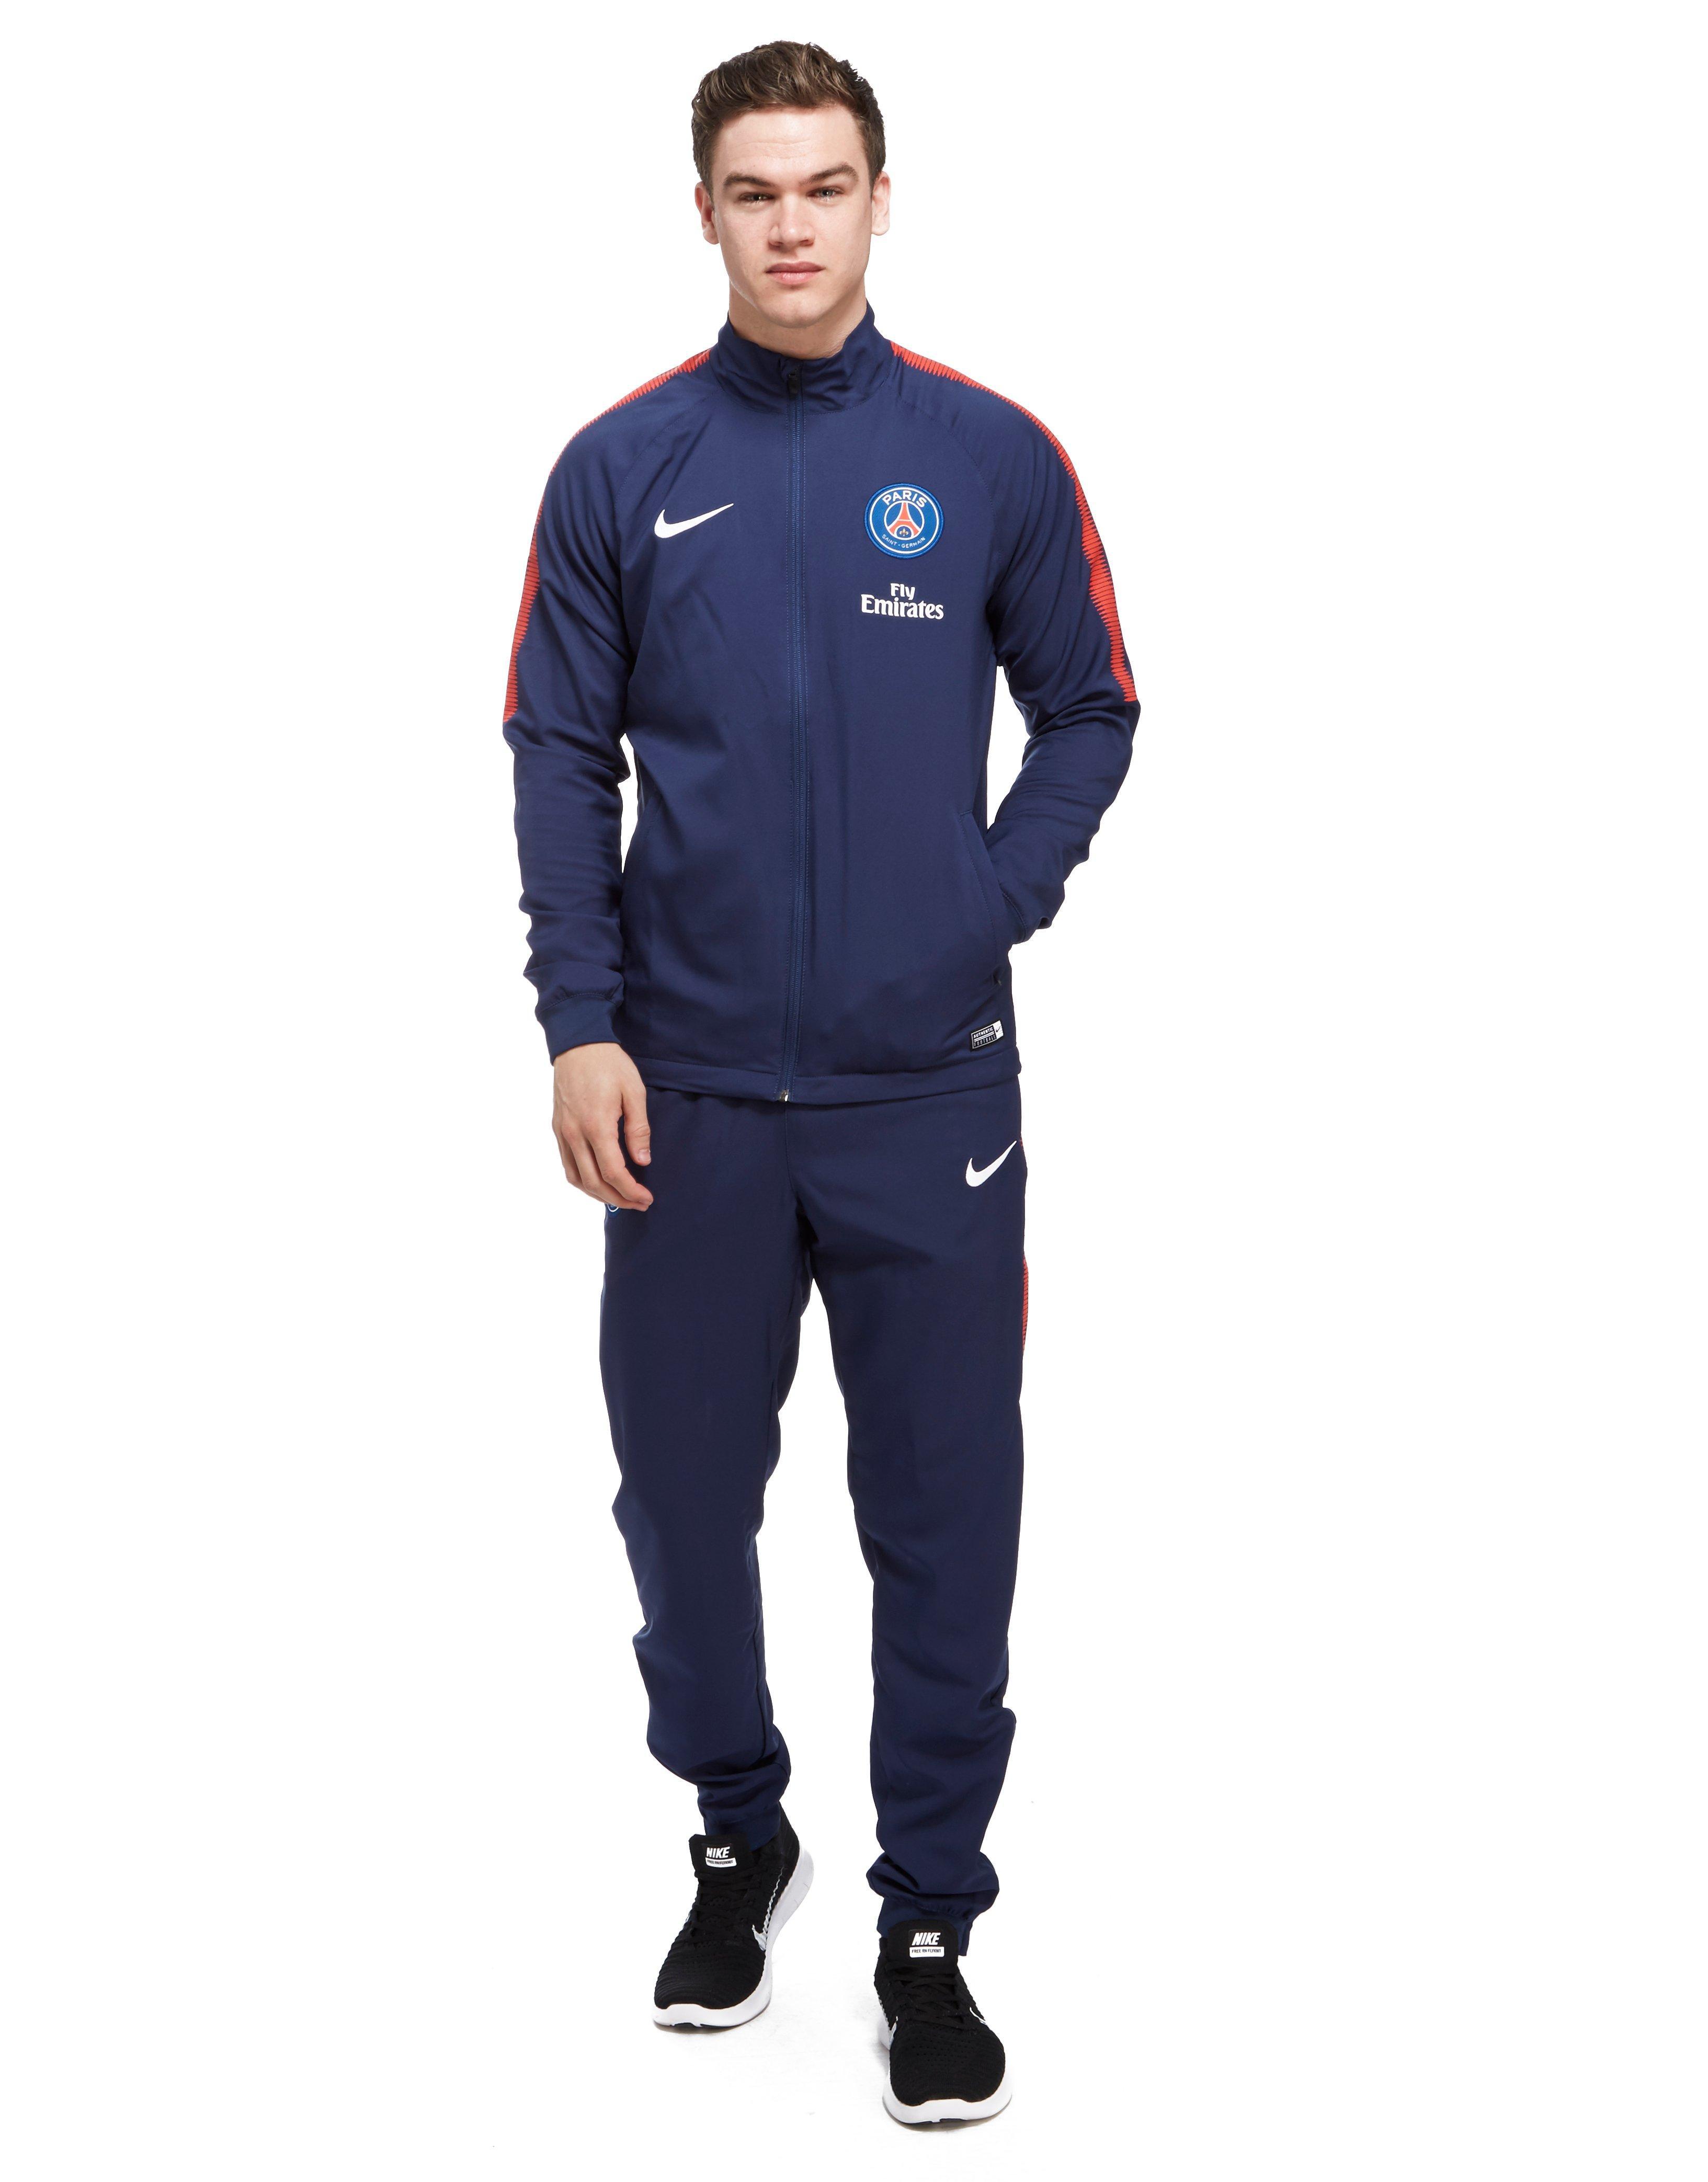 Nike Synthetic Paris Saint Germain 2017 Woven Suit in Navy (Blue) for Men -  Lyst